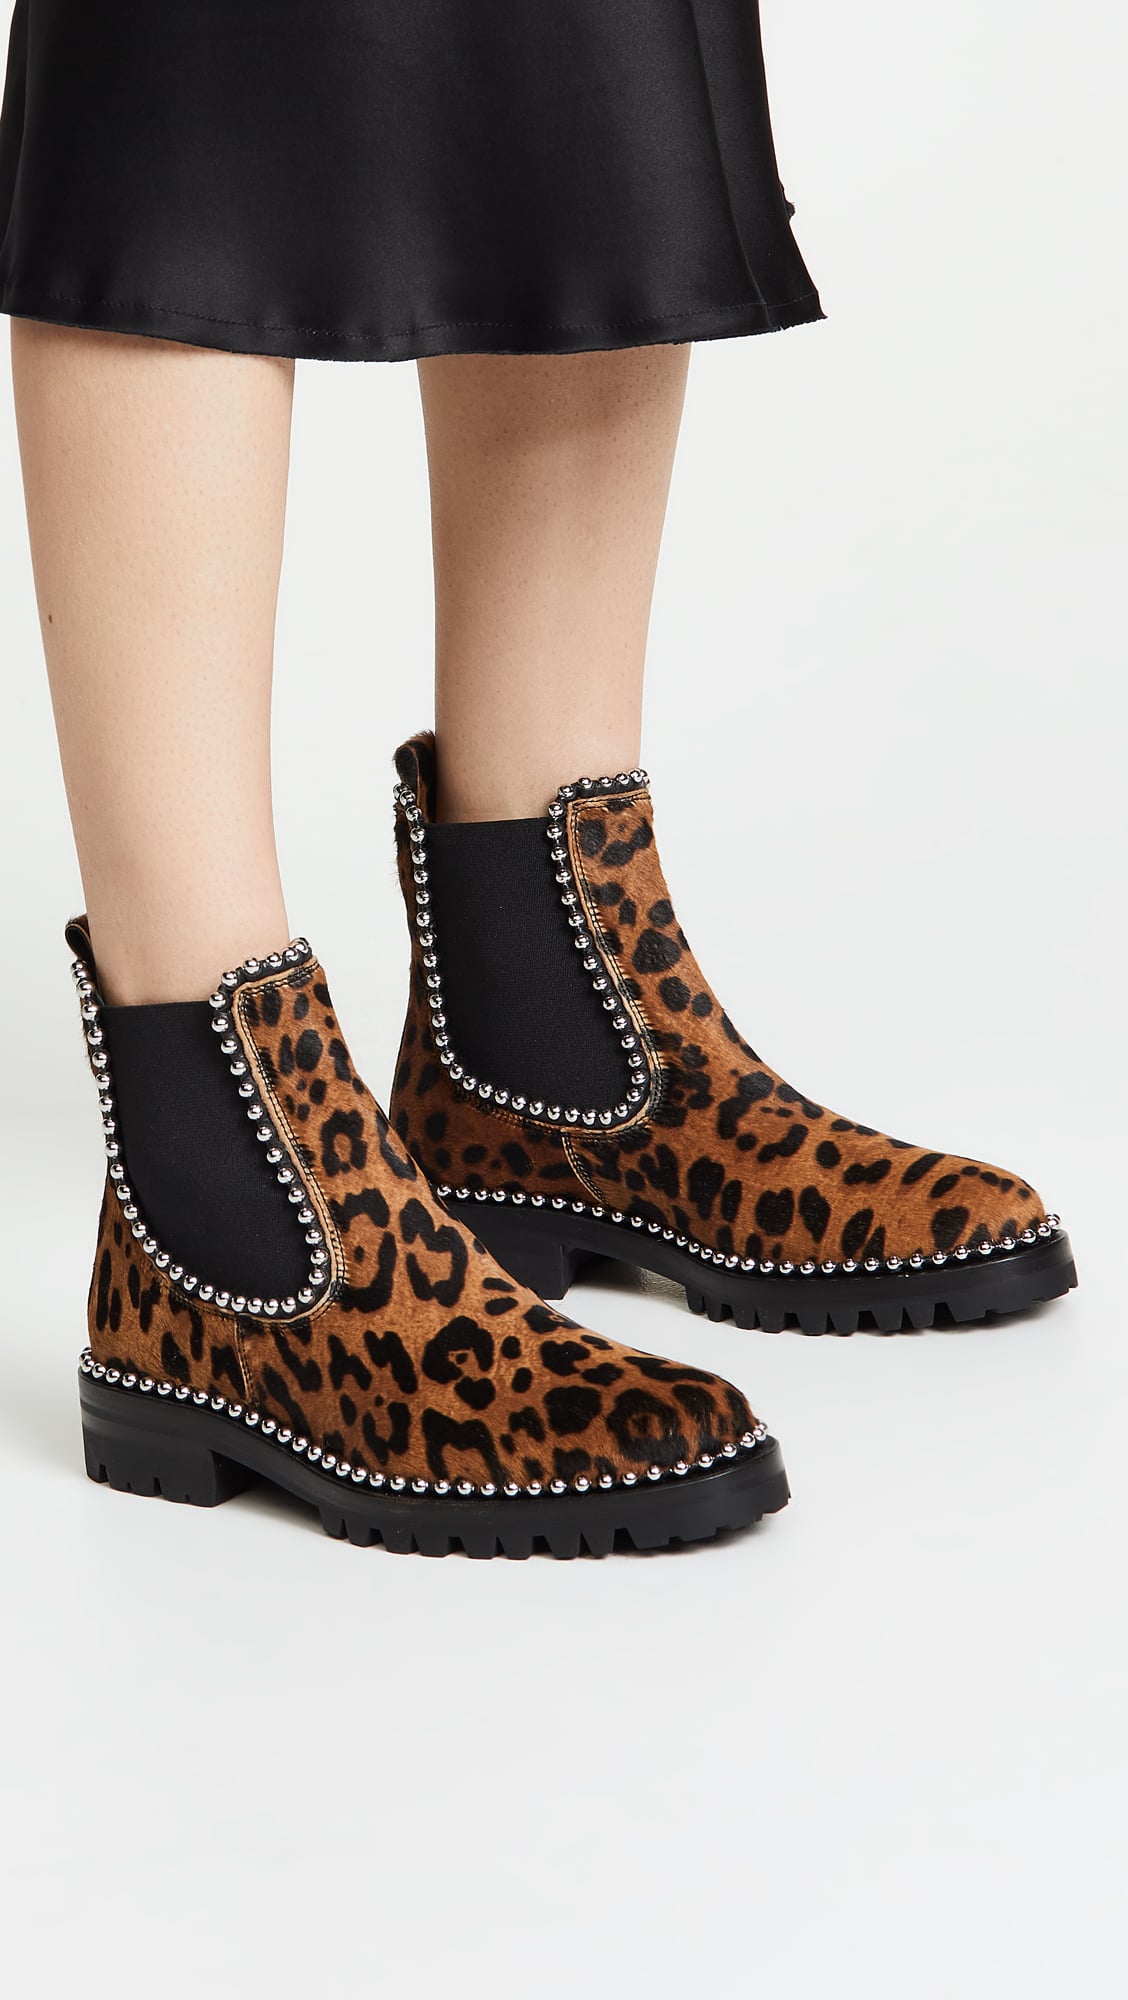 alexander wang cheetah boots